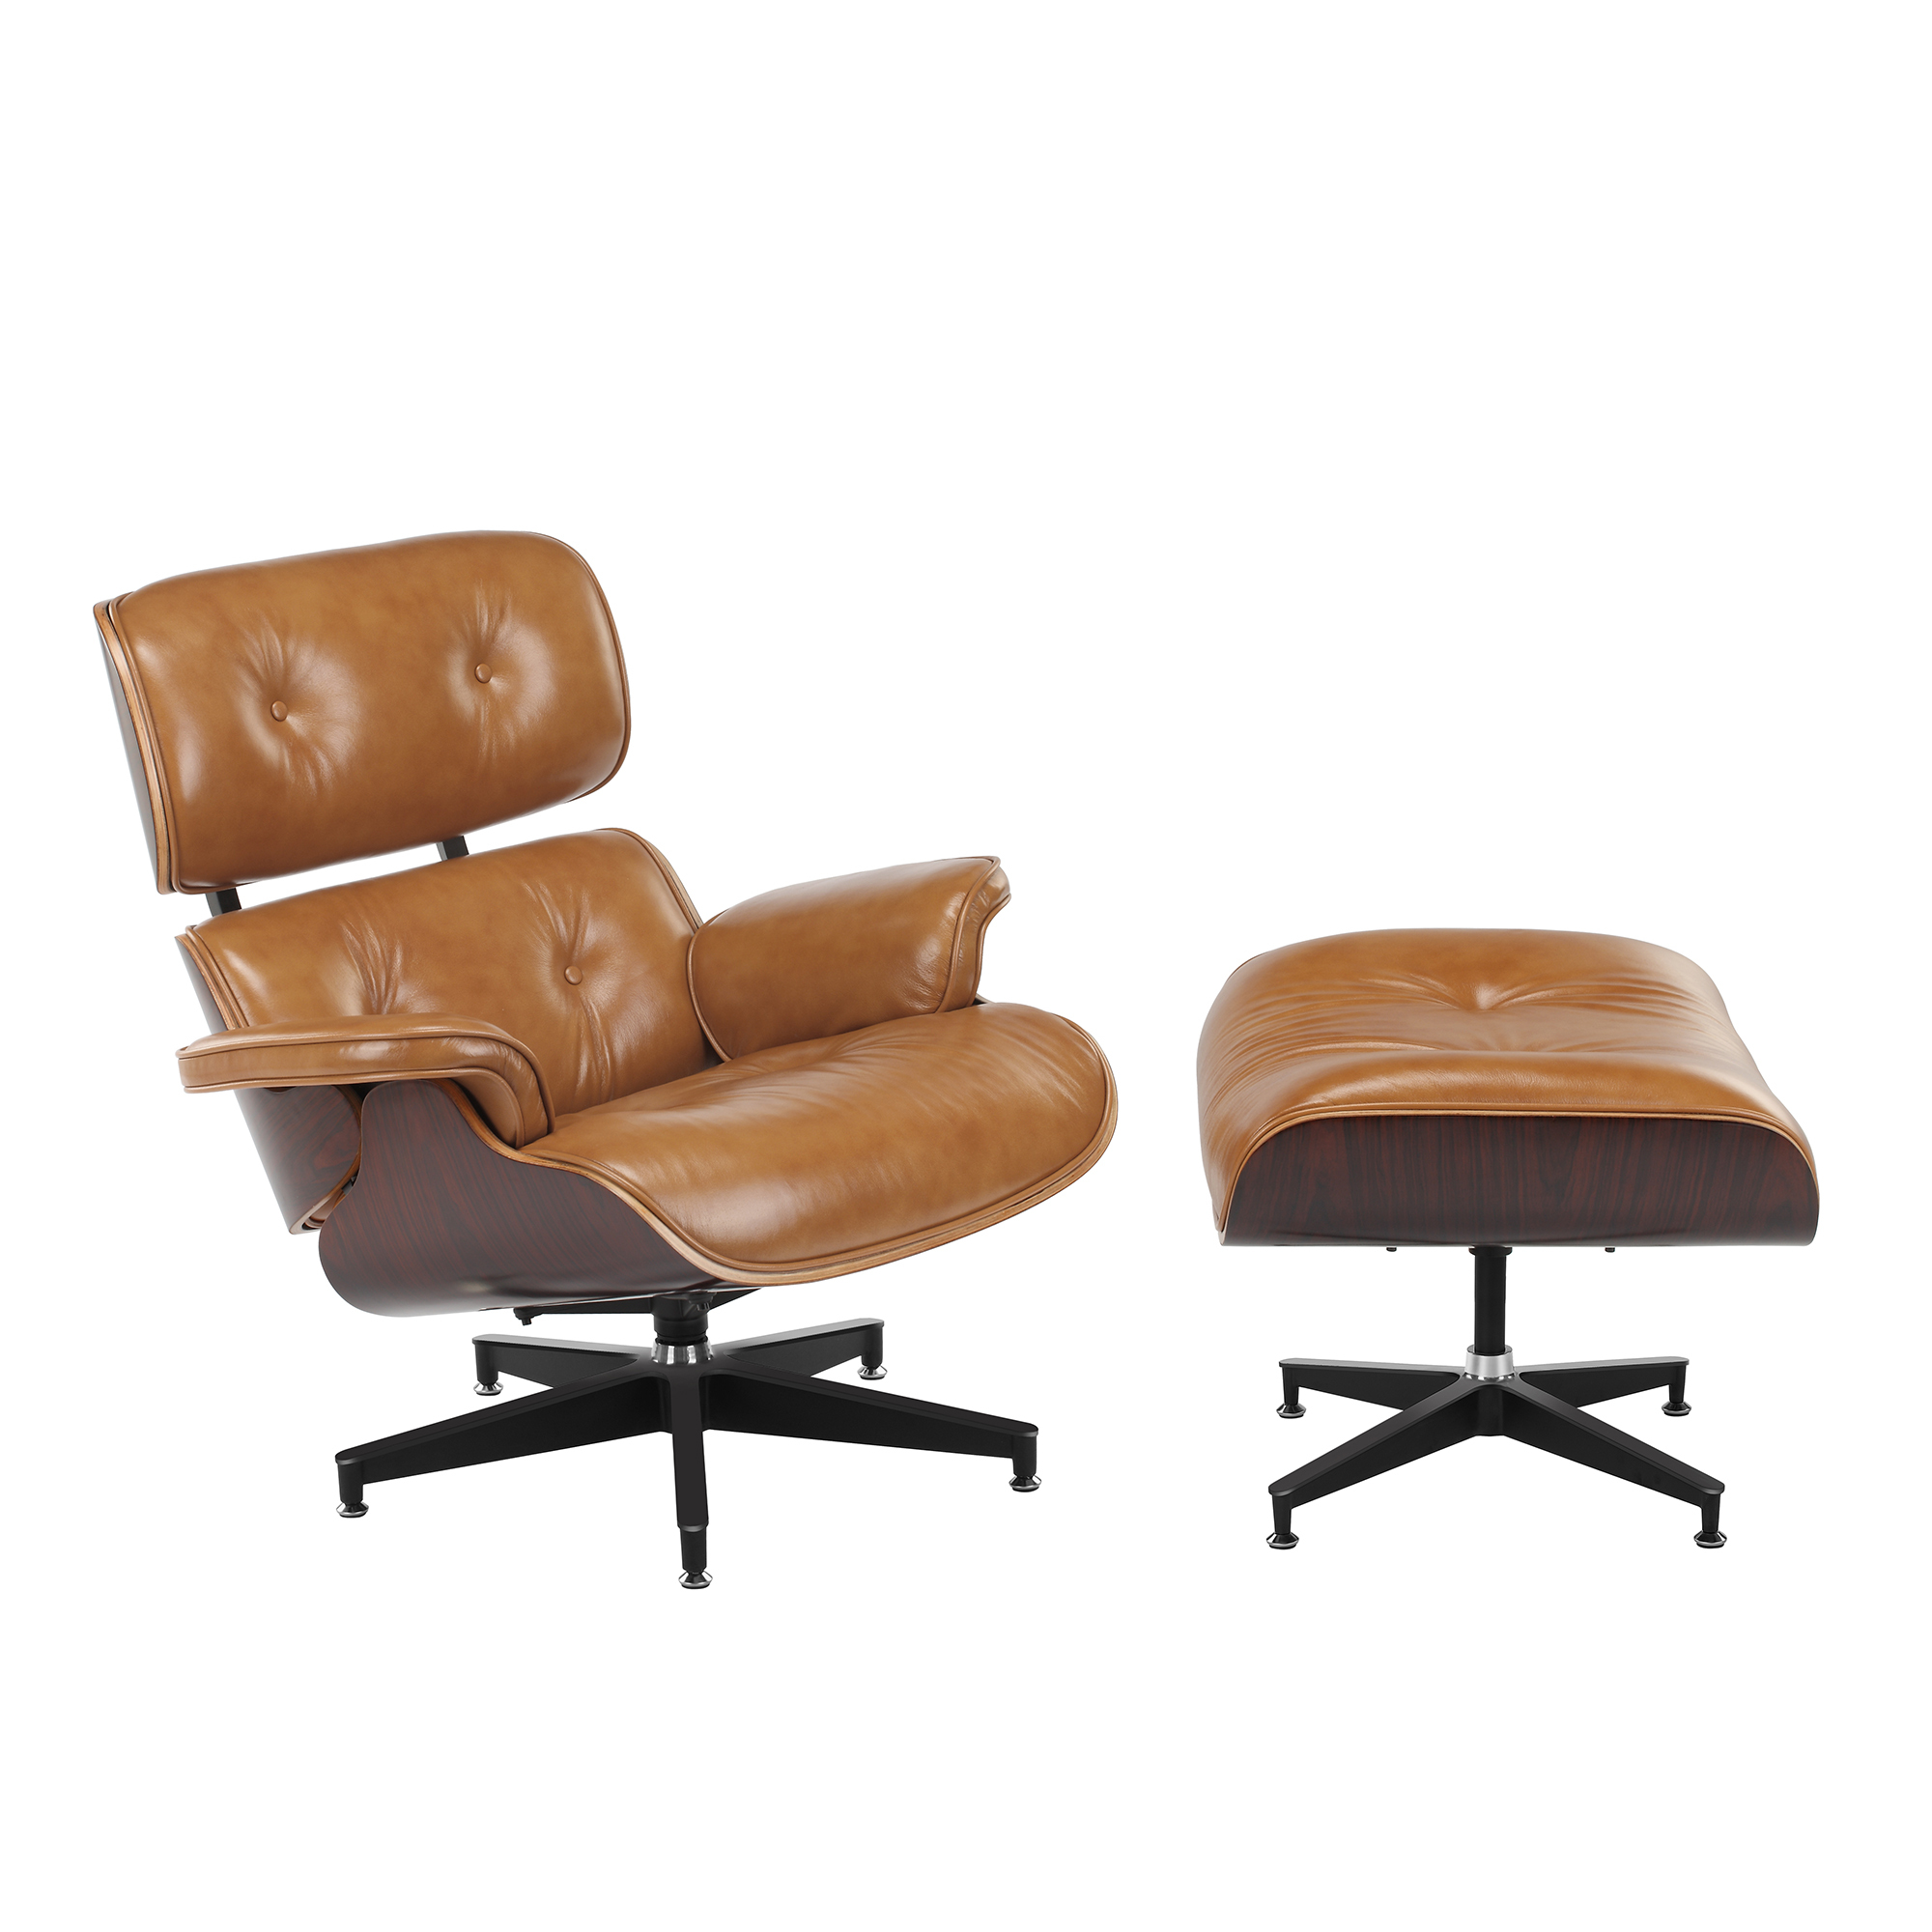 Eames Lounge Chair Replica Uk best eames lounge replica